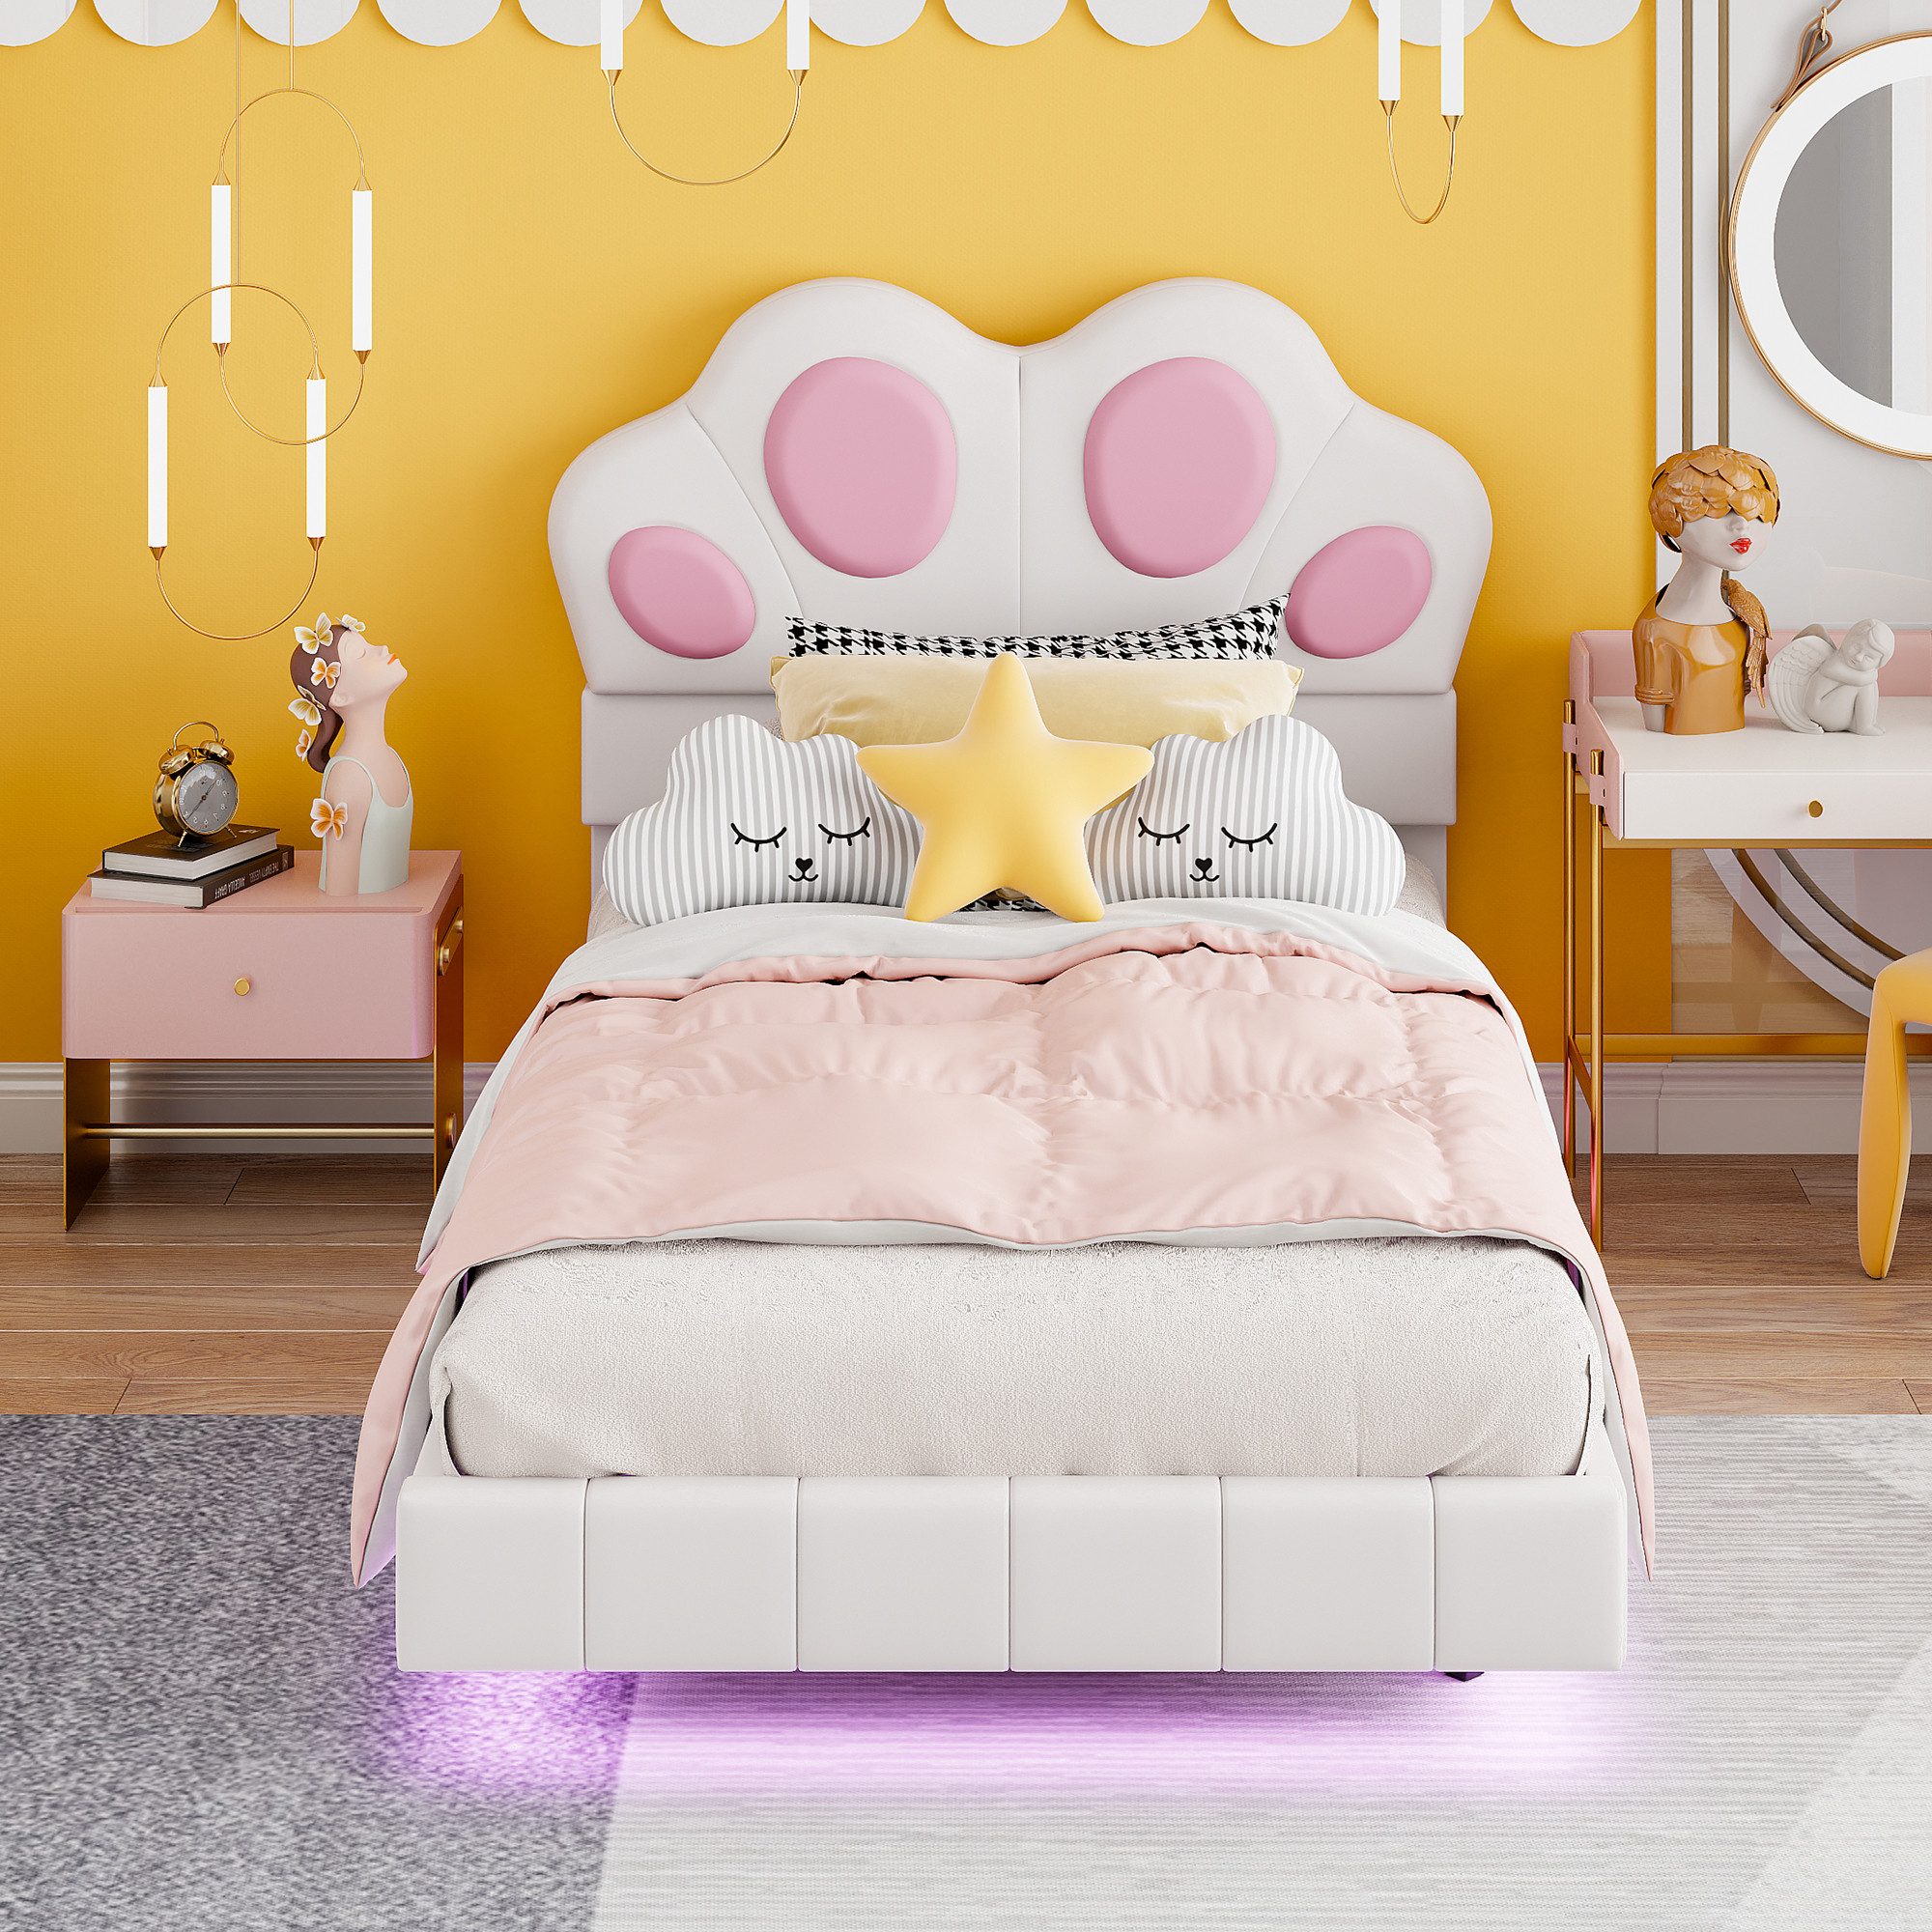 Gotagee Kinderbett Kinderbett Polsterbett Kopfteil in Katzenpfotenform LED Jugendbett, Katzenpfotenform am Kopfende des Bettes, Kunstlederstoff